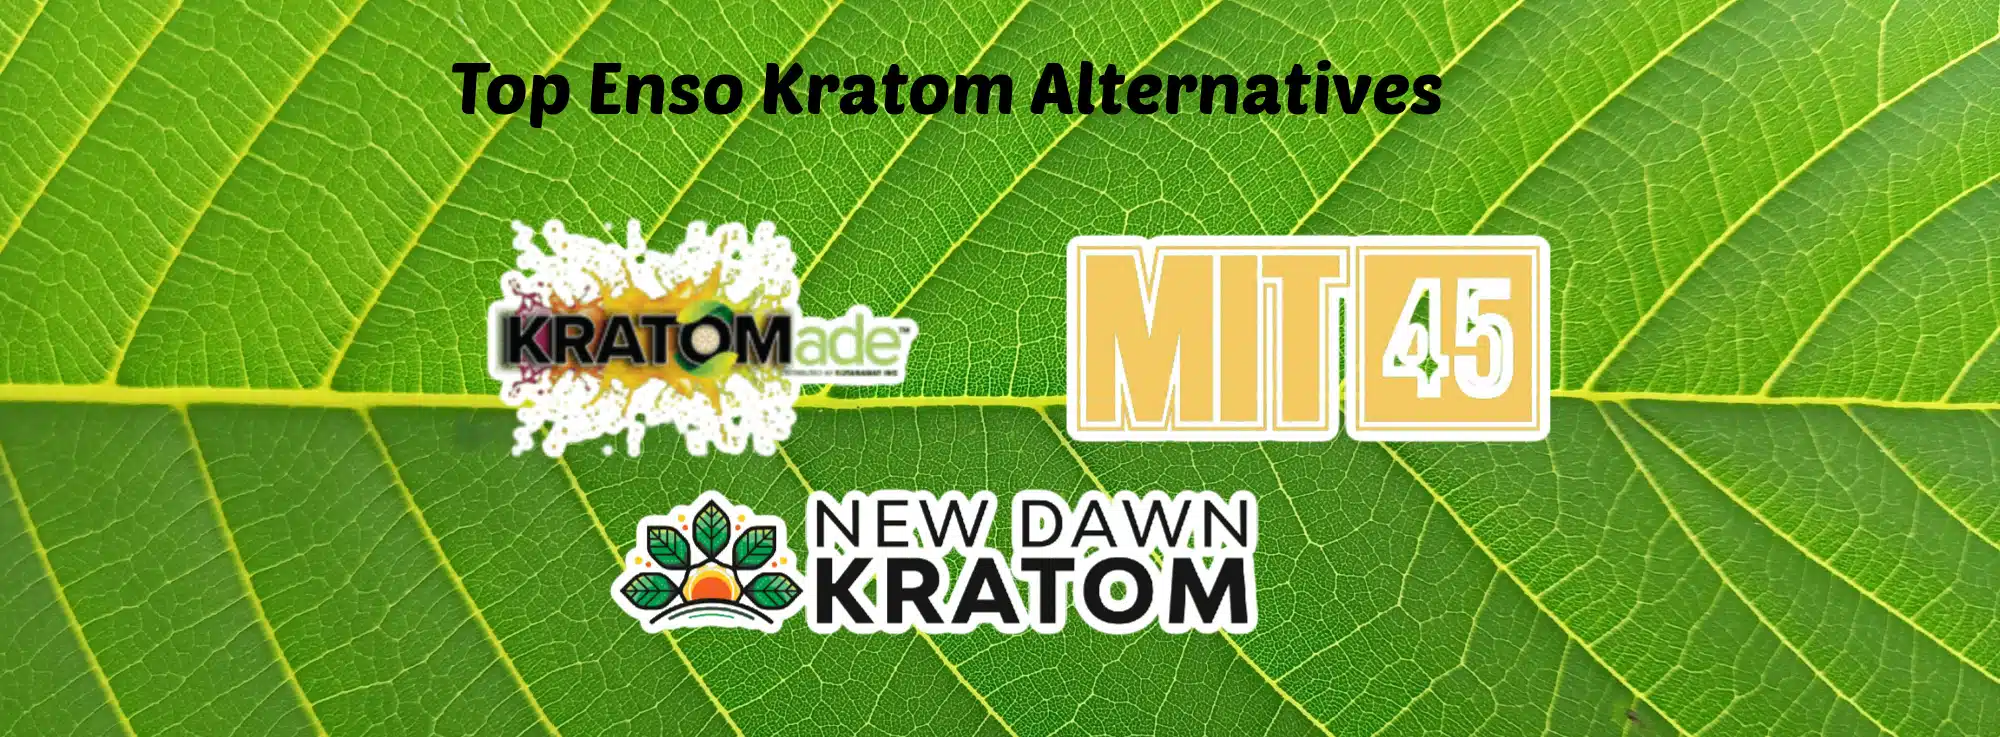 top enso kratom alternatives and their logos